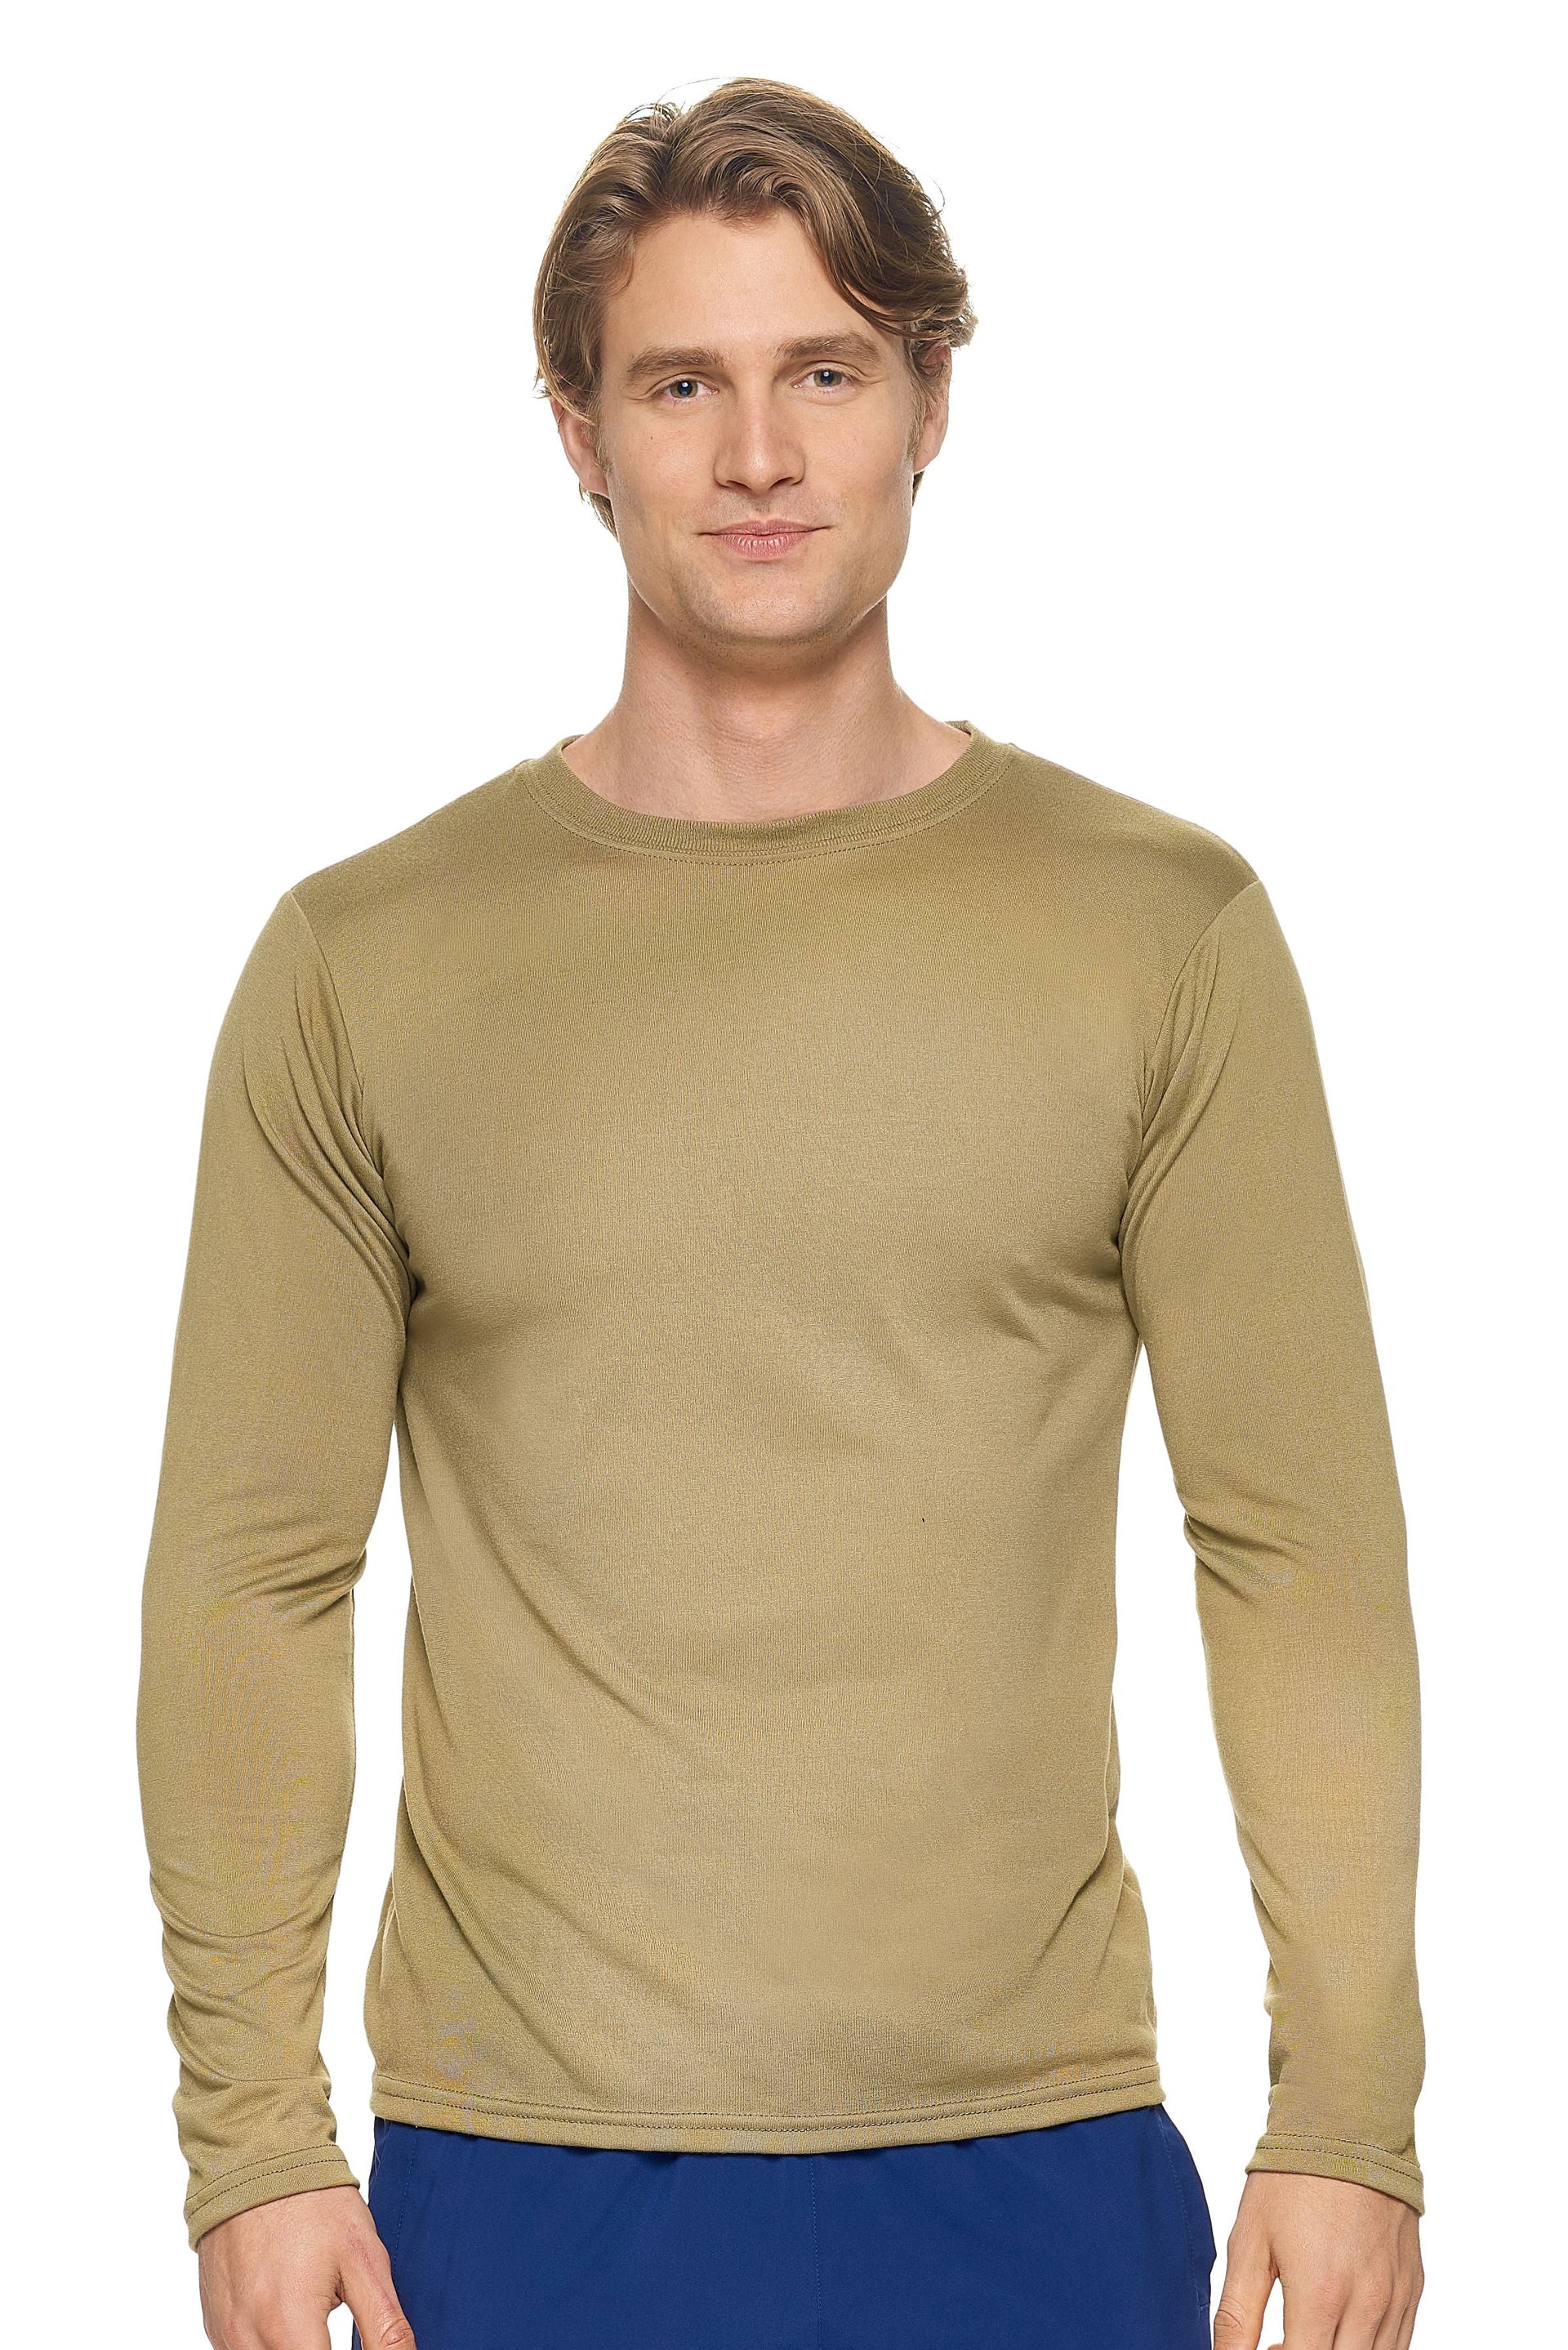 Military Physical Training Long Sleeve Shirt 🇺🇸 - Mercantile Mountain